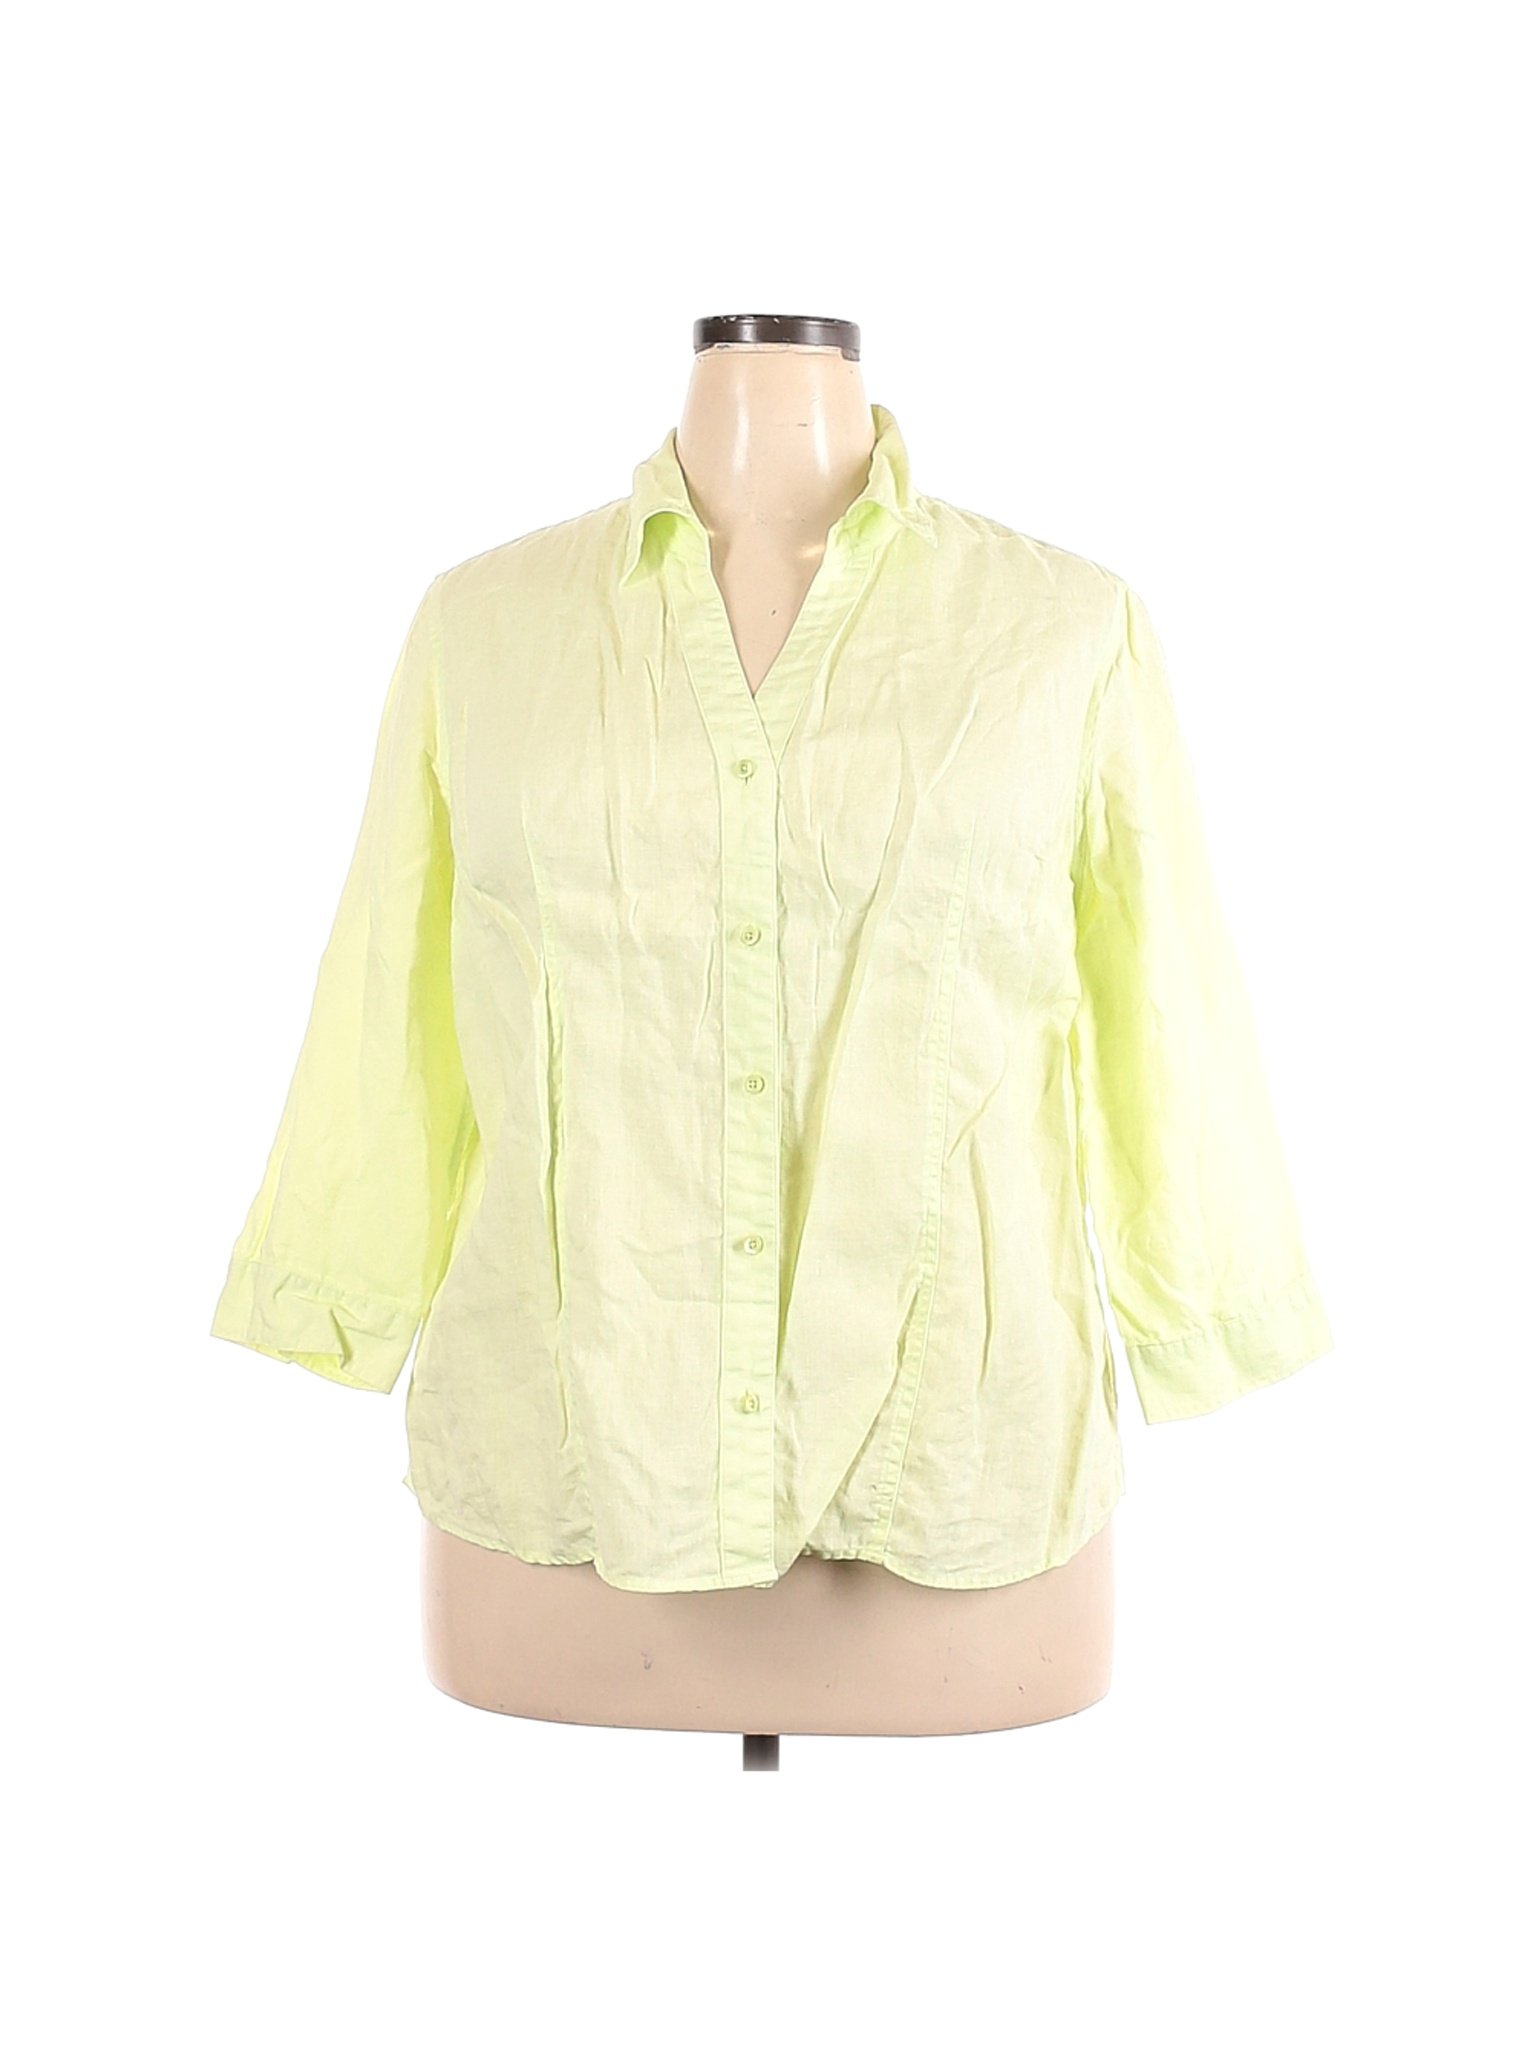 Talbots Outlet Women Yellow Long Sleeve Button-Down Shirt 2X Plus | eBay